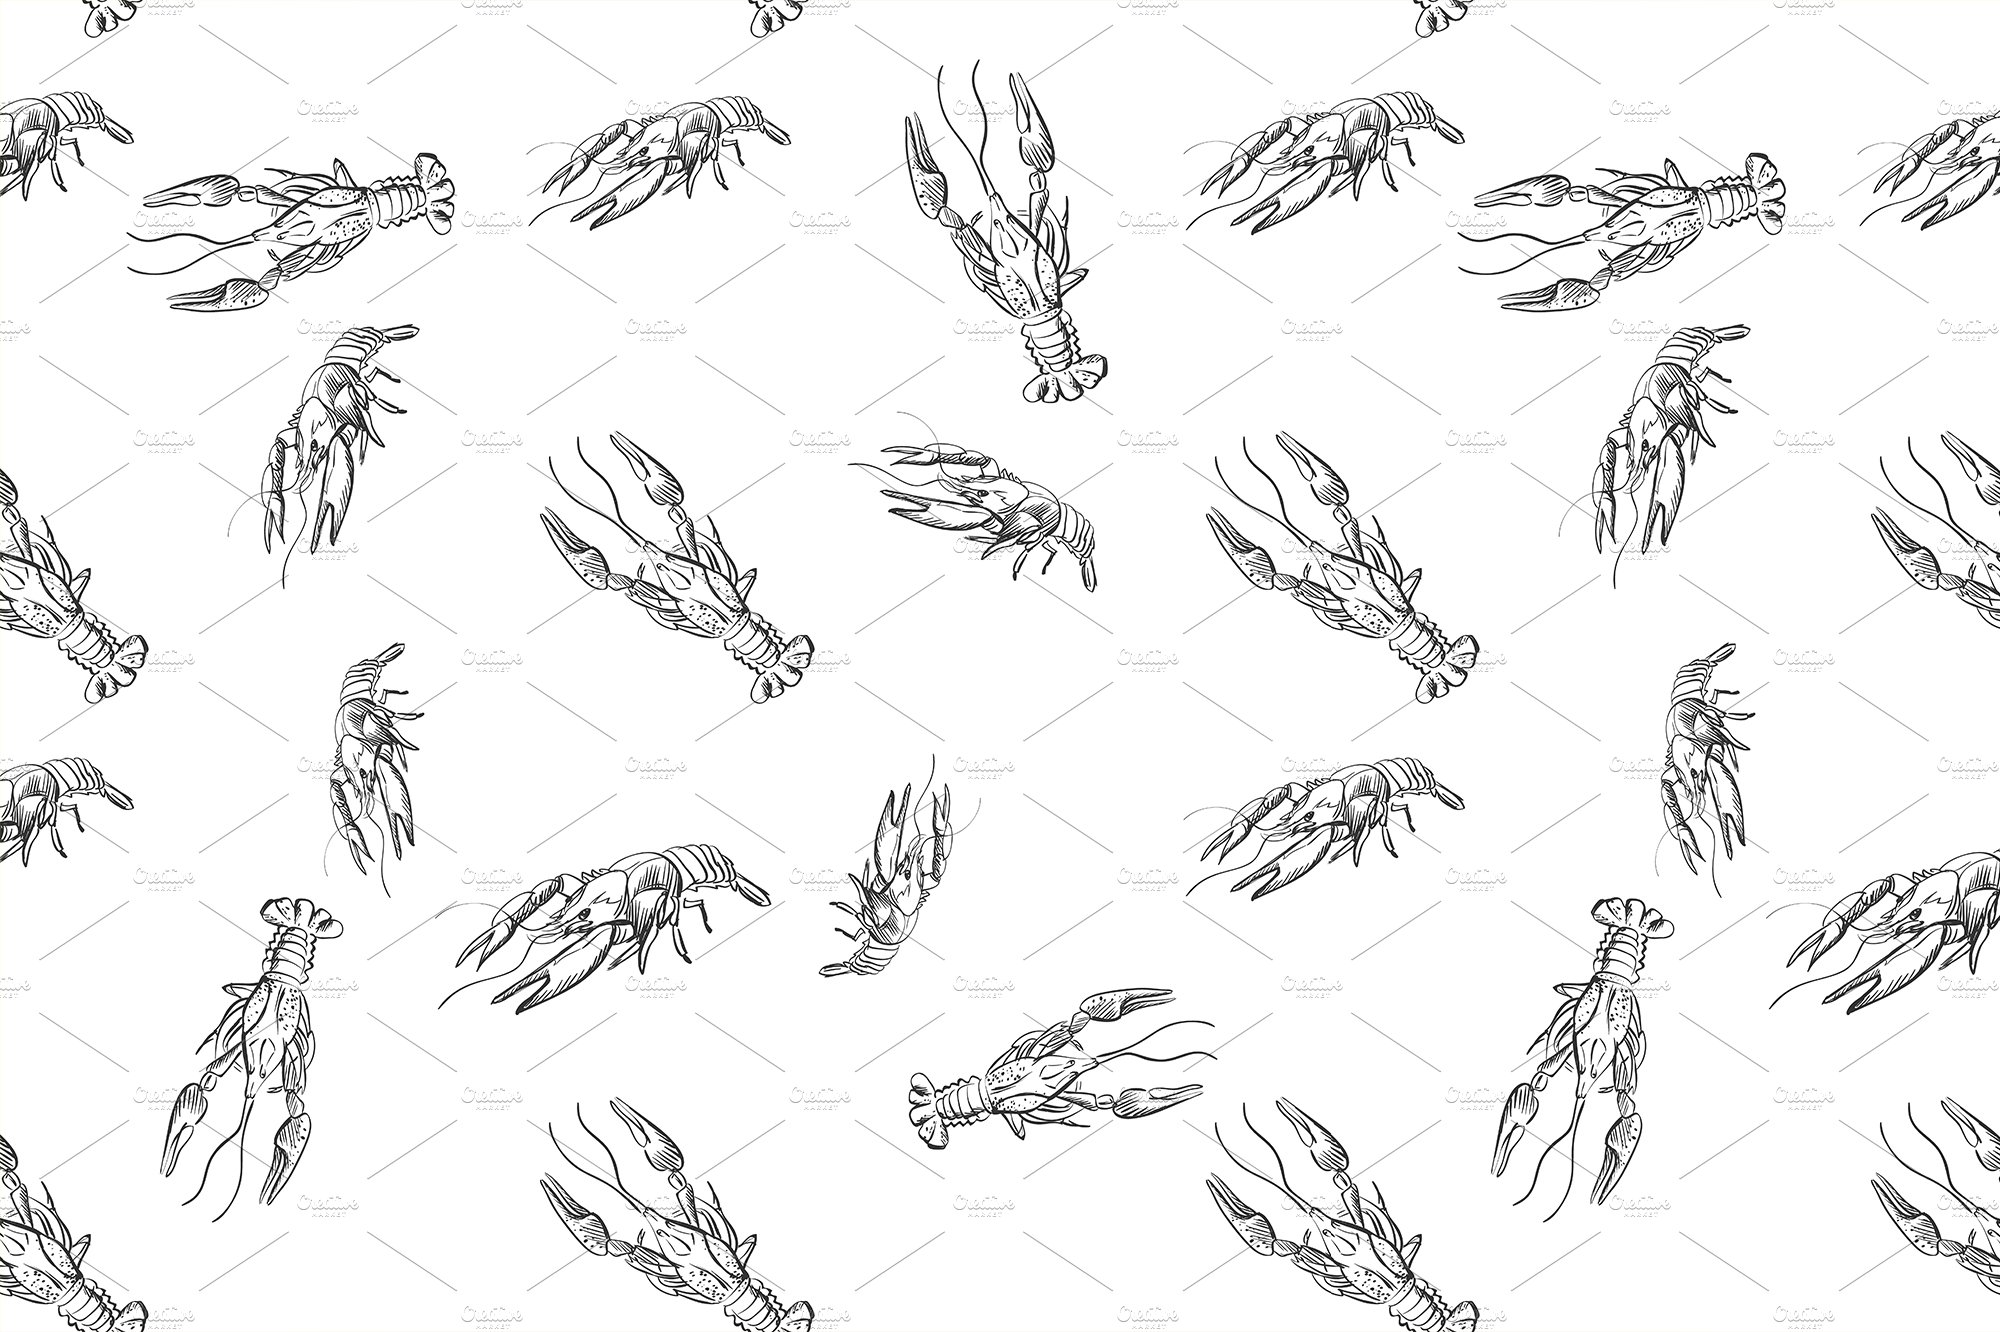 doodle lobster pattern cover image.